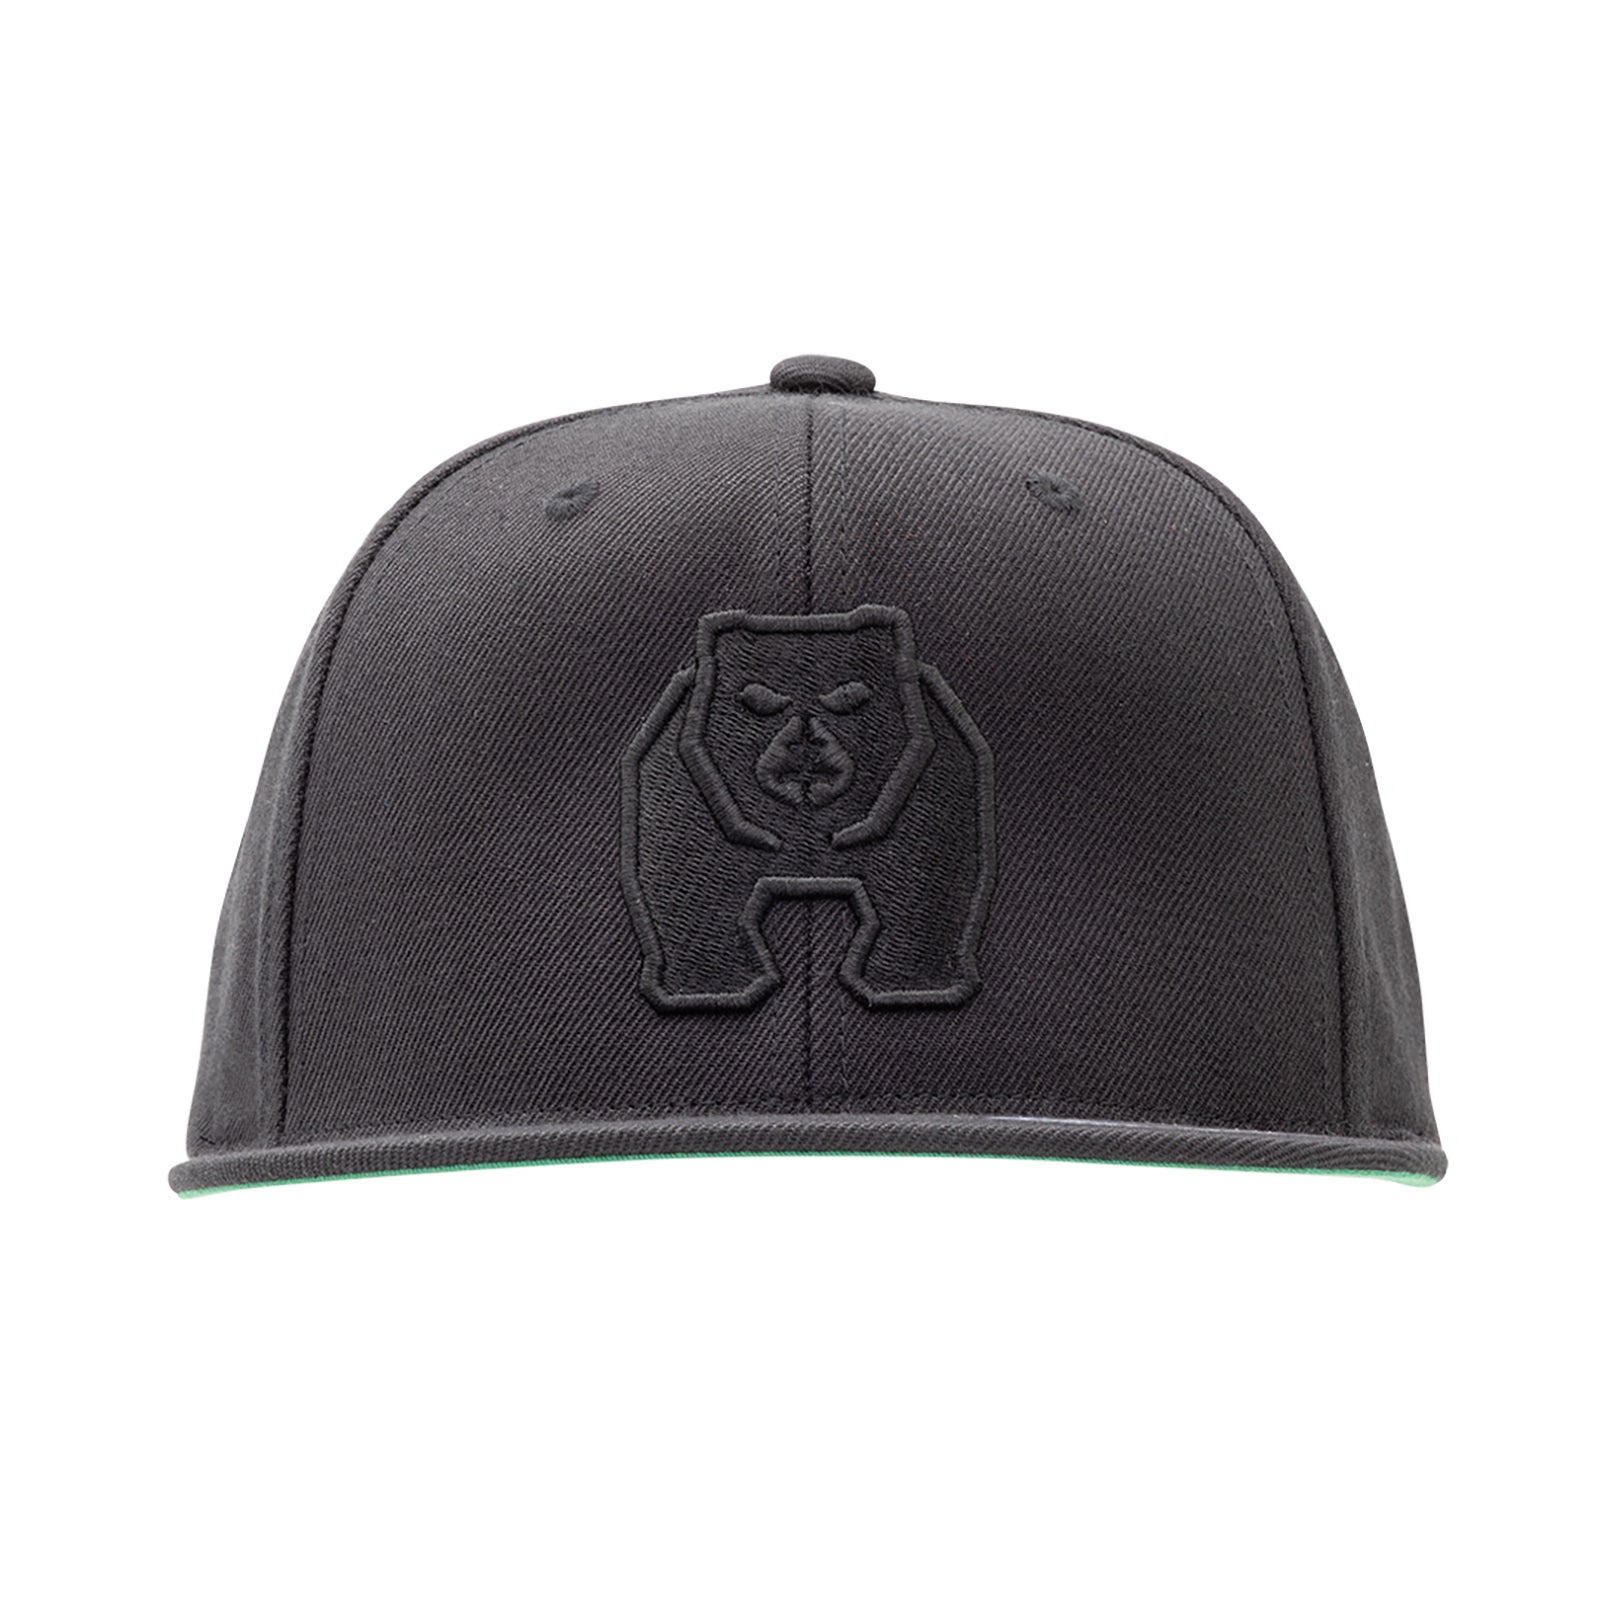 Kodiak® Black Snapback Hat